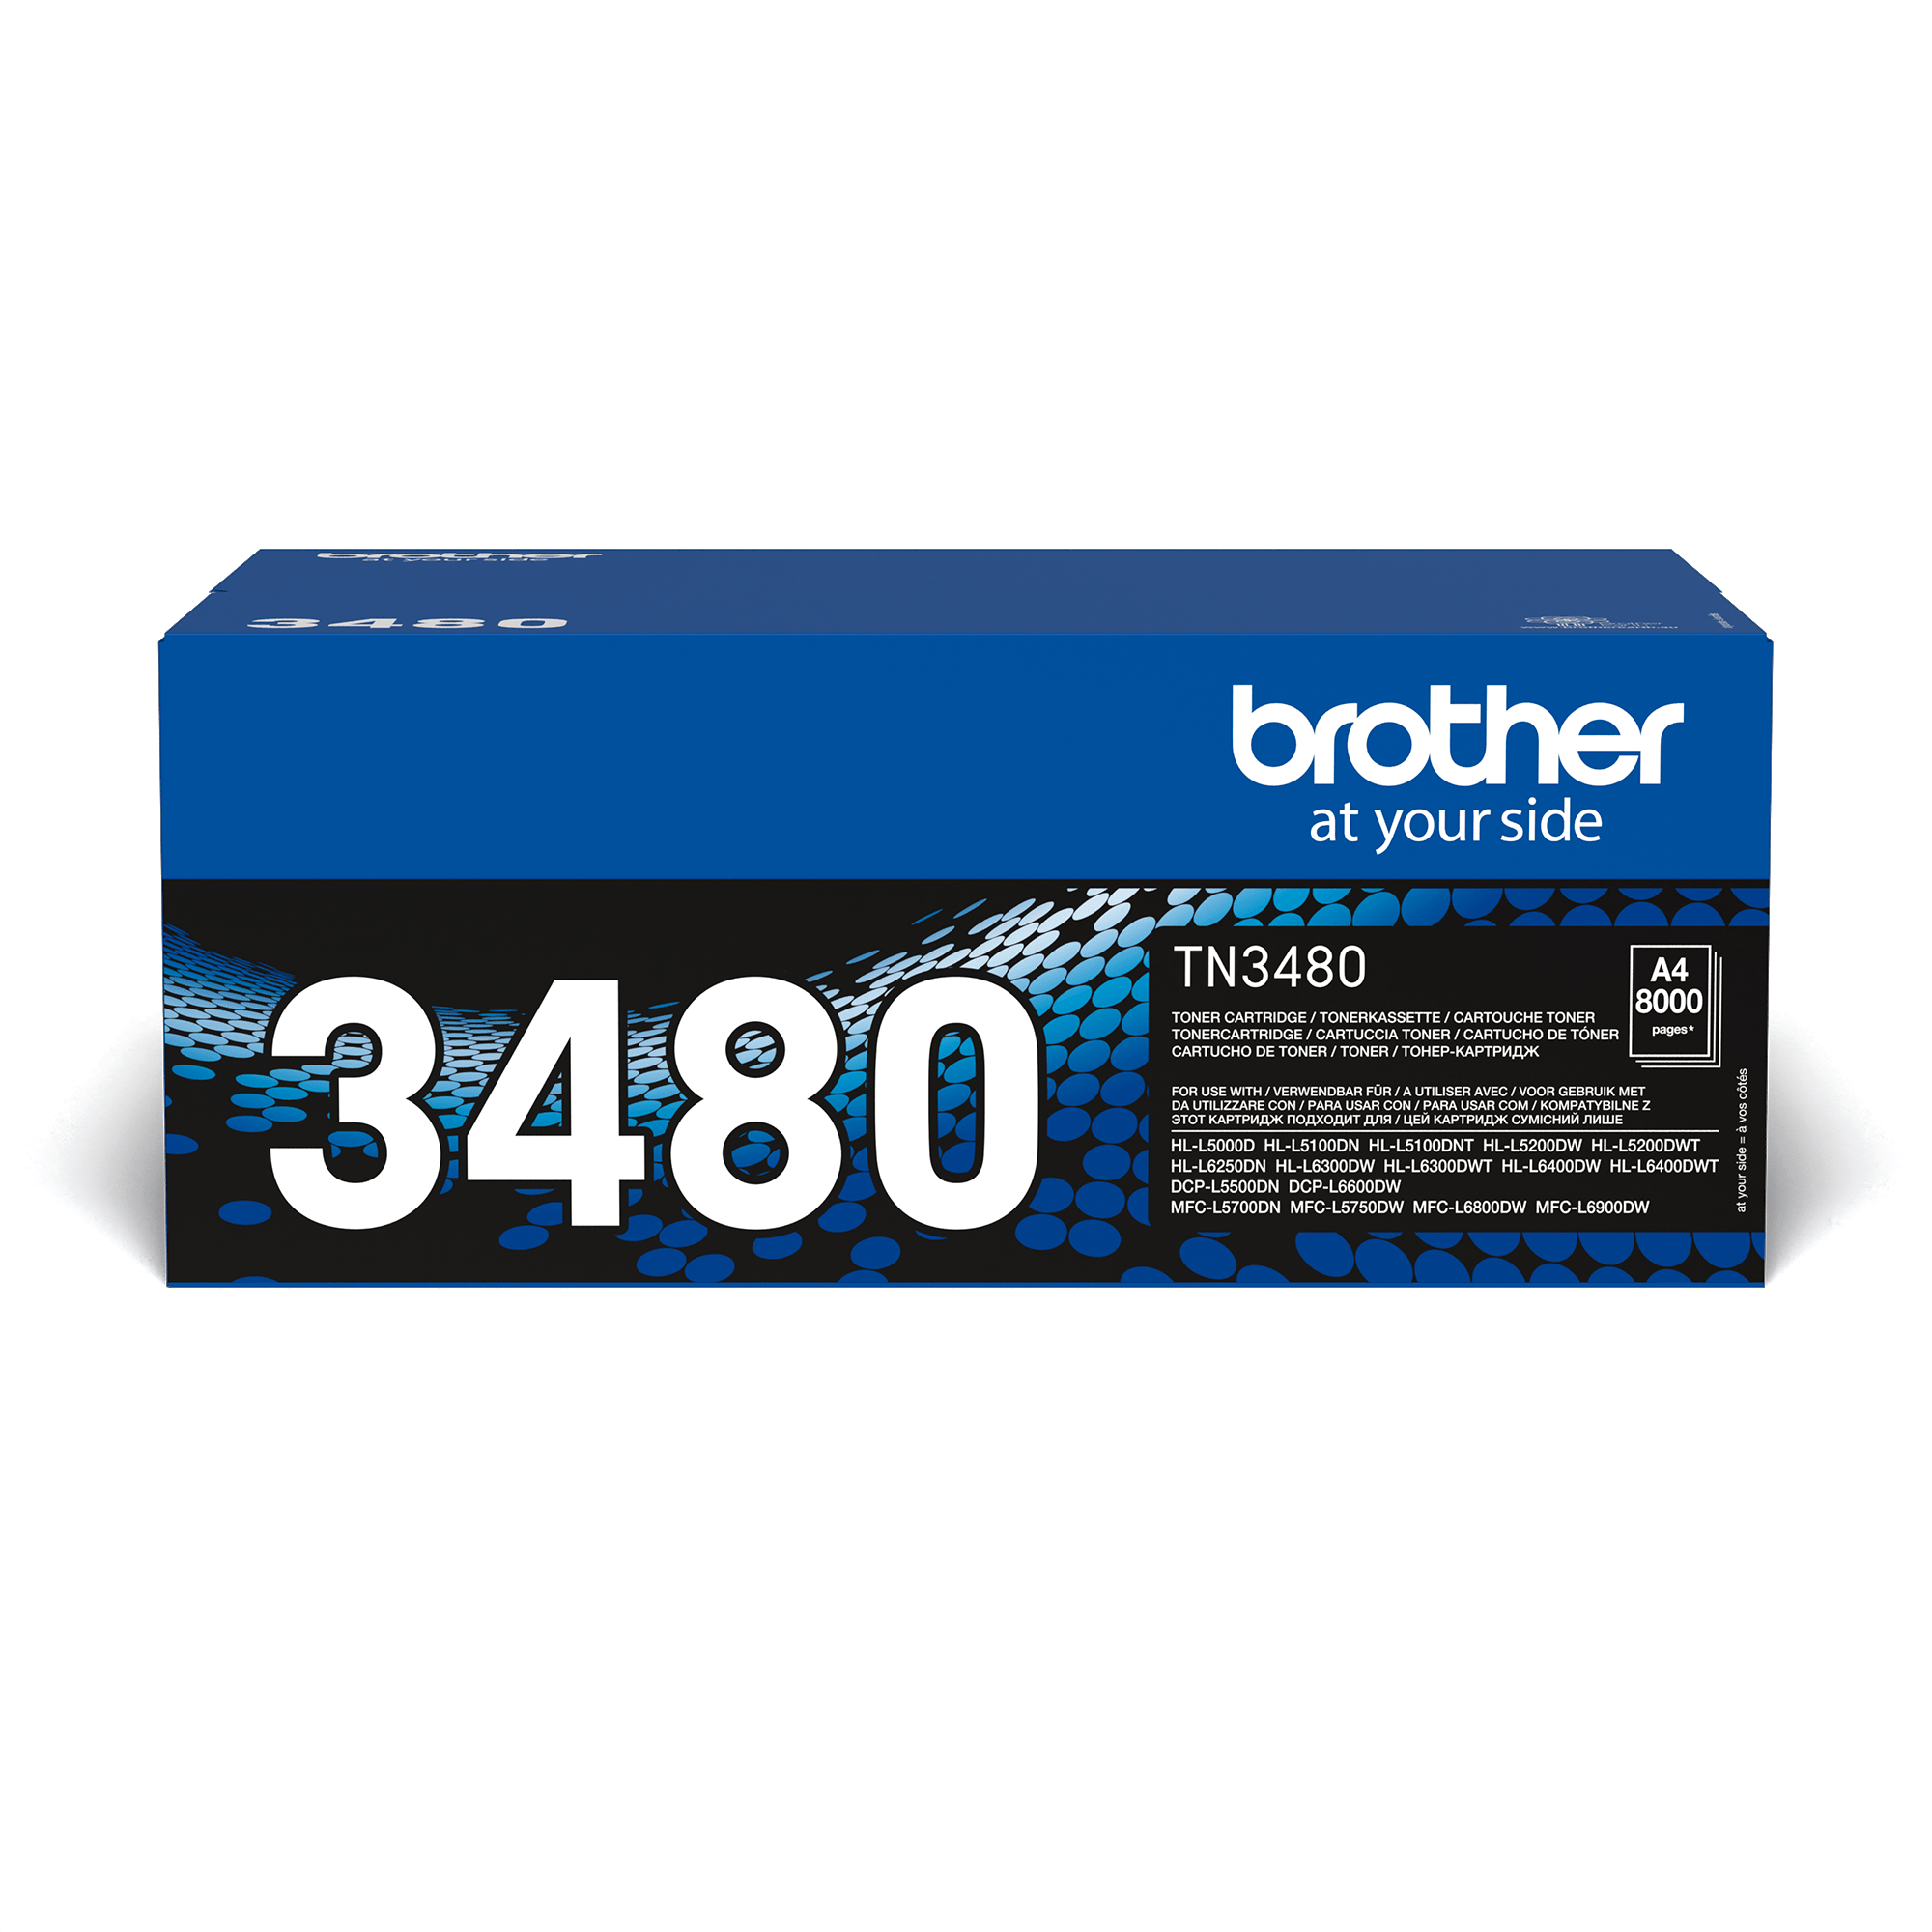 TN3480  Original Brother TN-3480 Black Toner, prints up to 8,000